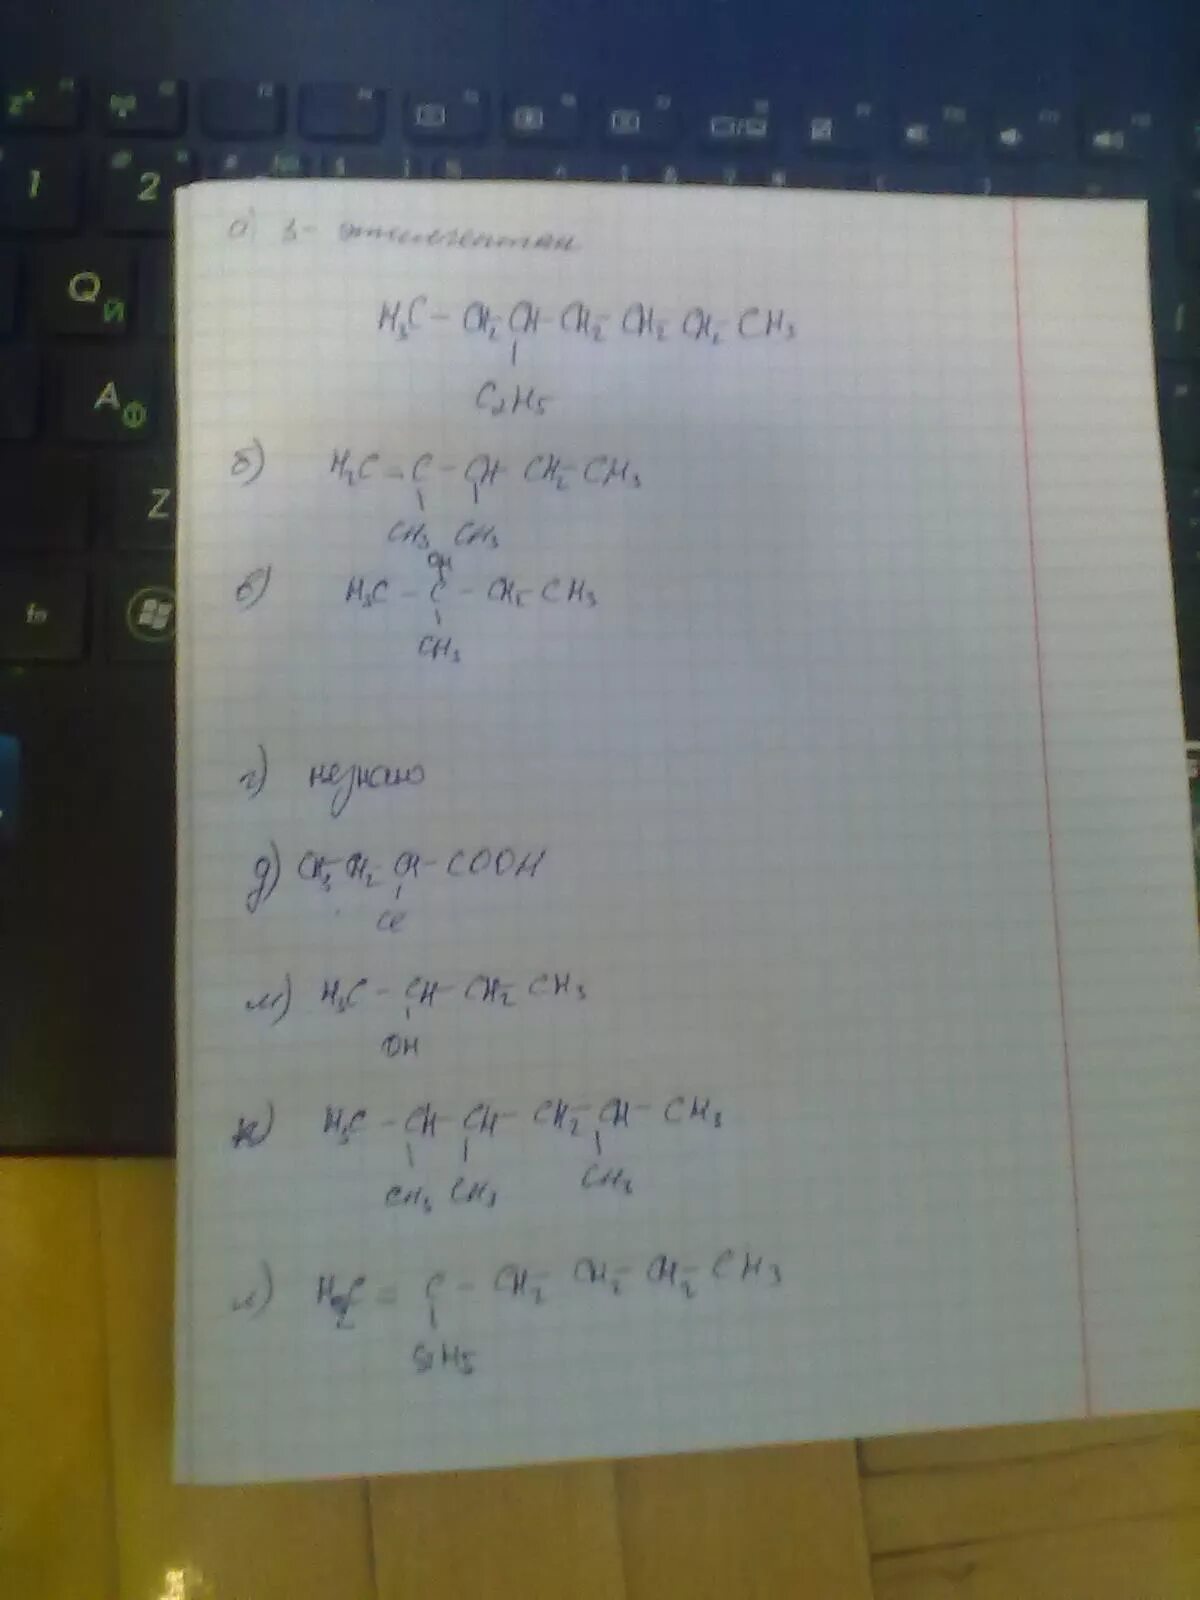 2 Метилбутанол 2 структурная формула. 2 Хлорпропановая кислота структурная формула. Формула 3-метилбутанола-2. 2 Метилбутанол 1 структурная формула. Хлорпропановая кислота формула